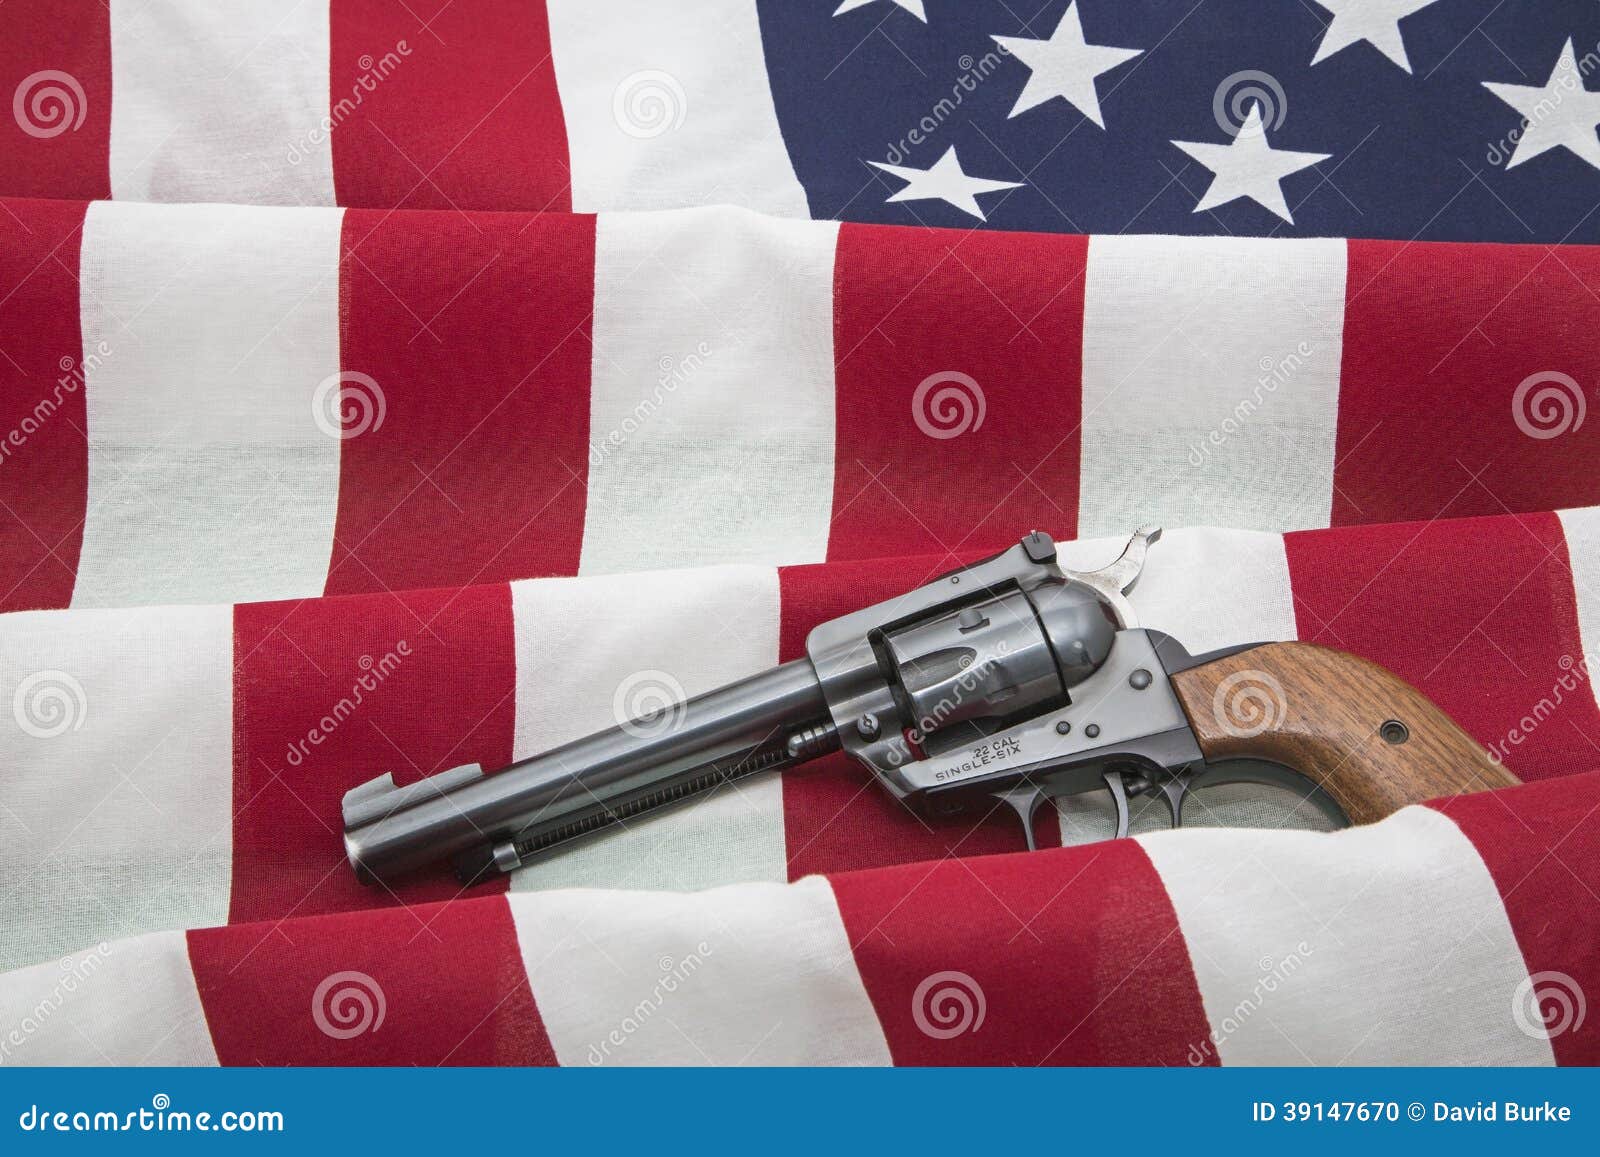 Second Amendment Rights Revolver USA Flag Stock Photo - Image: 39147670